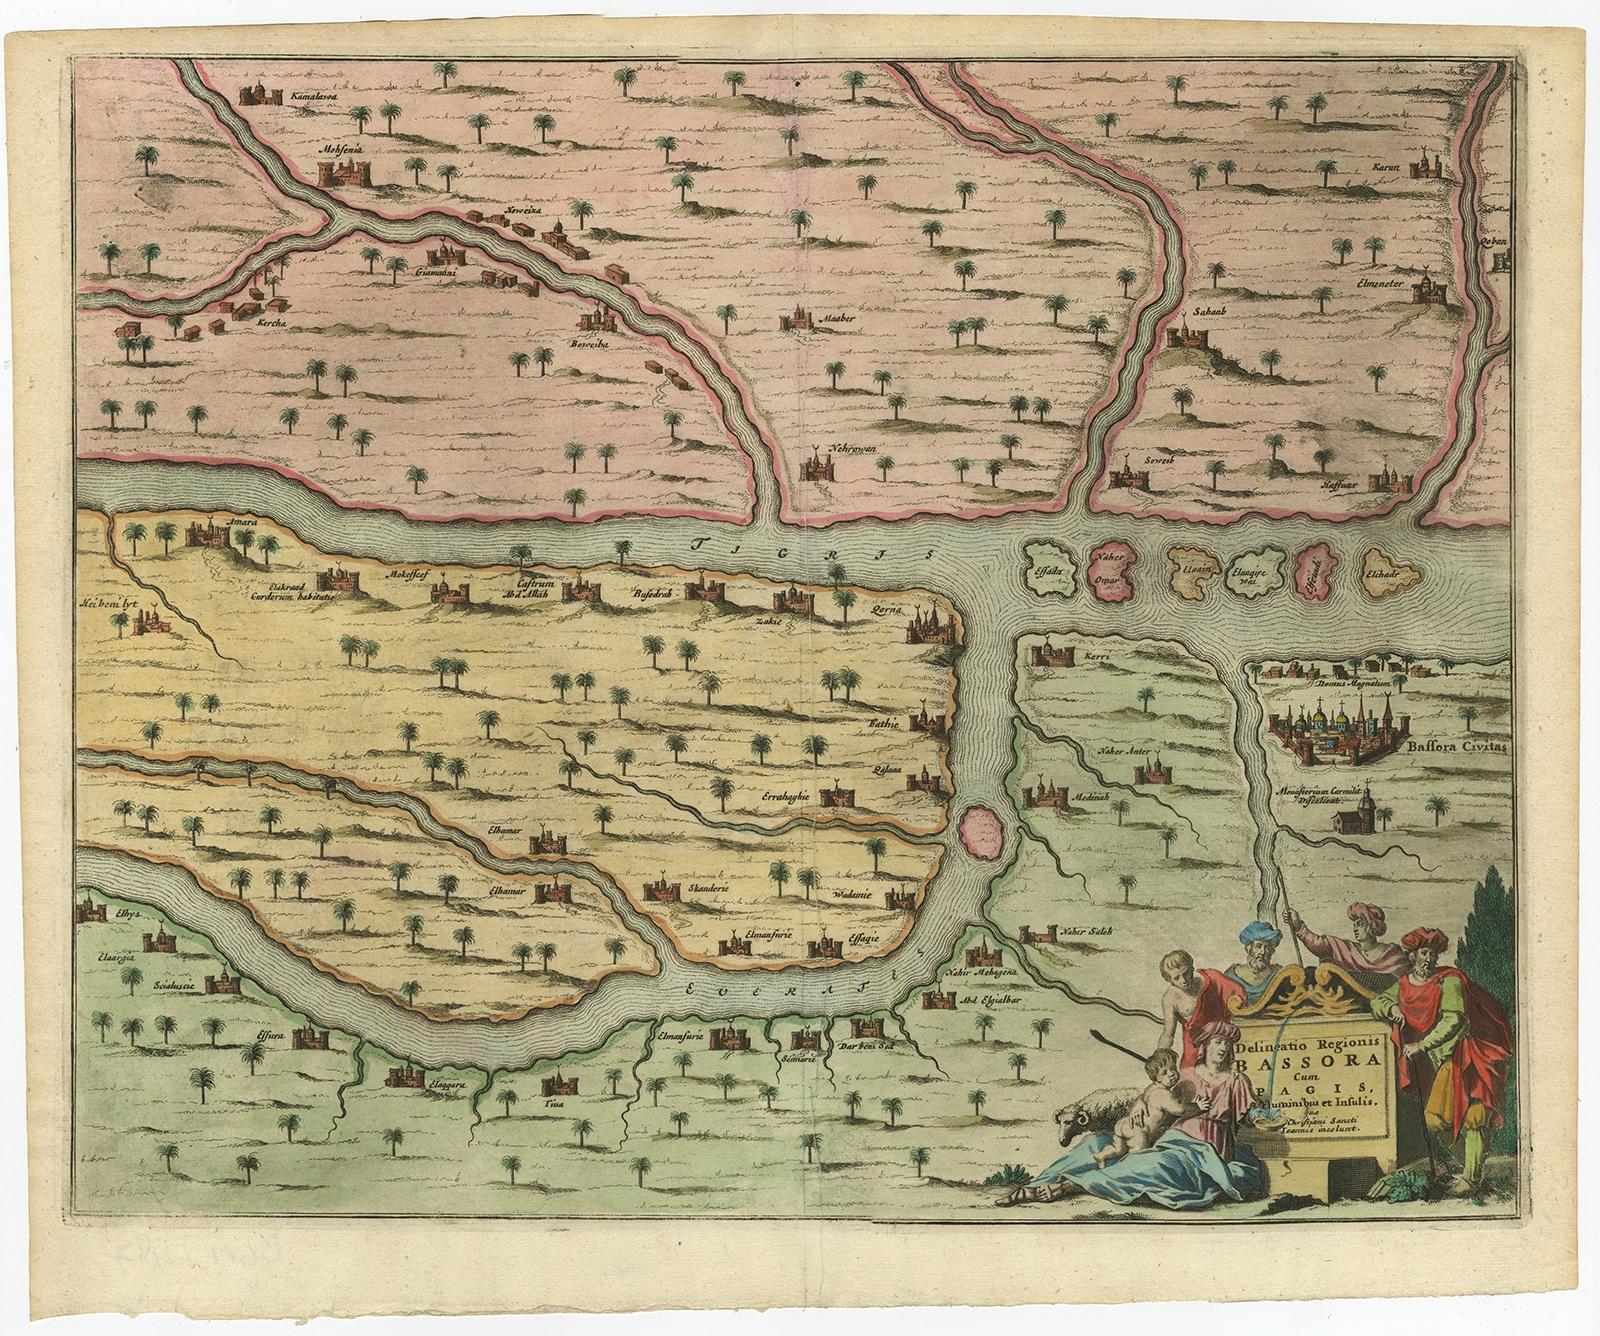 Description: Antique map titled 'Delineato Regionis Bassora cum Angis uminibus et Isulis.' 

Map of the Bassora (Basra) region, Iraq.

Artists and Engravers: Made by 'Olfert Dapper' after an anonymous artist. Olfert Dapper (c. 1635 - 1689) was a